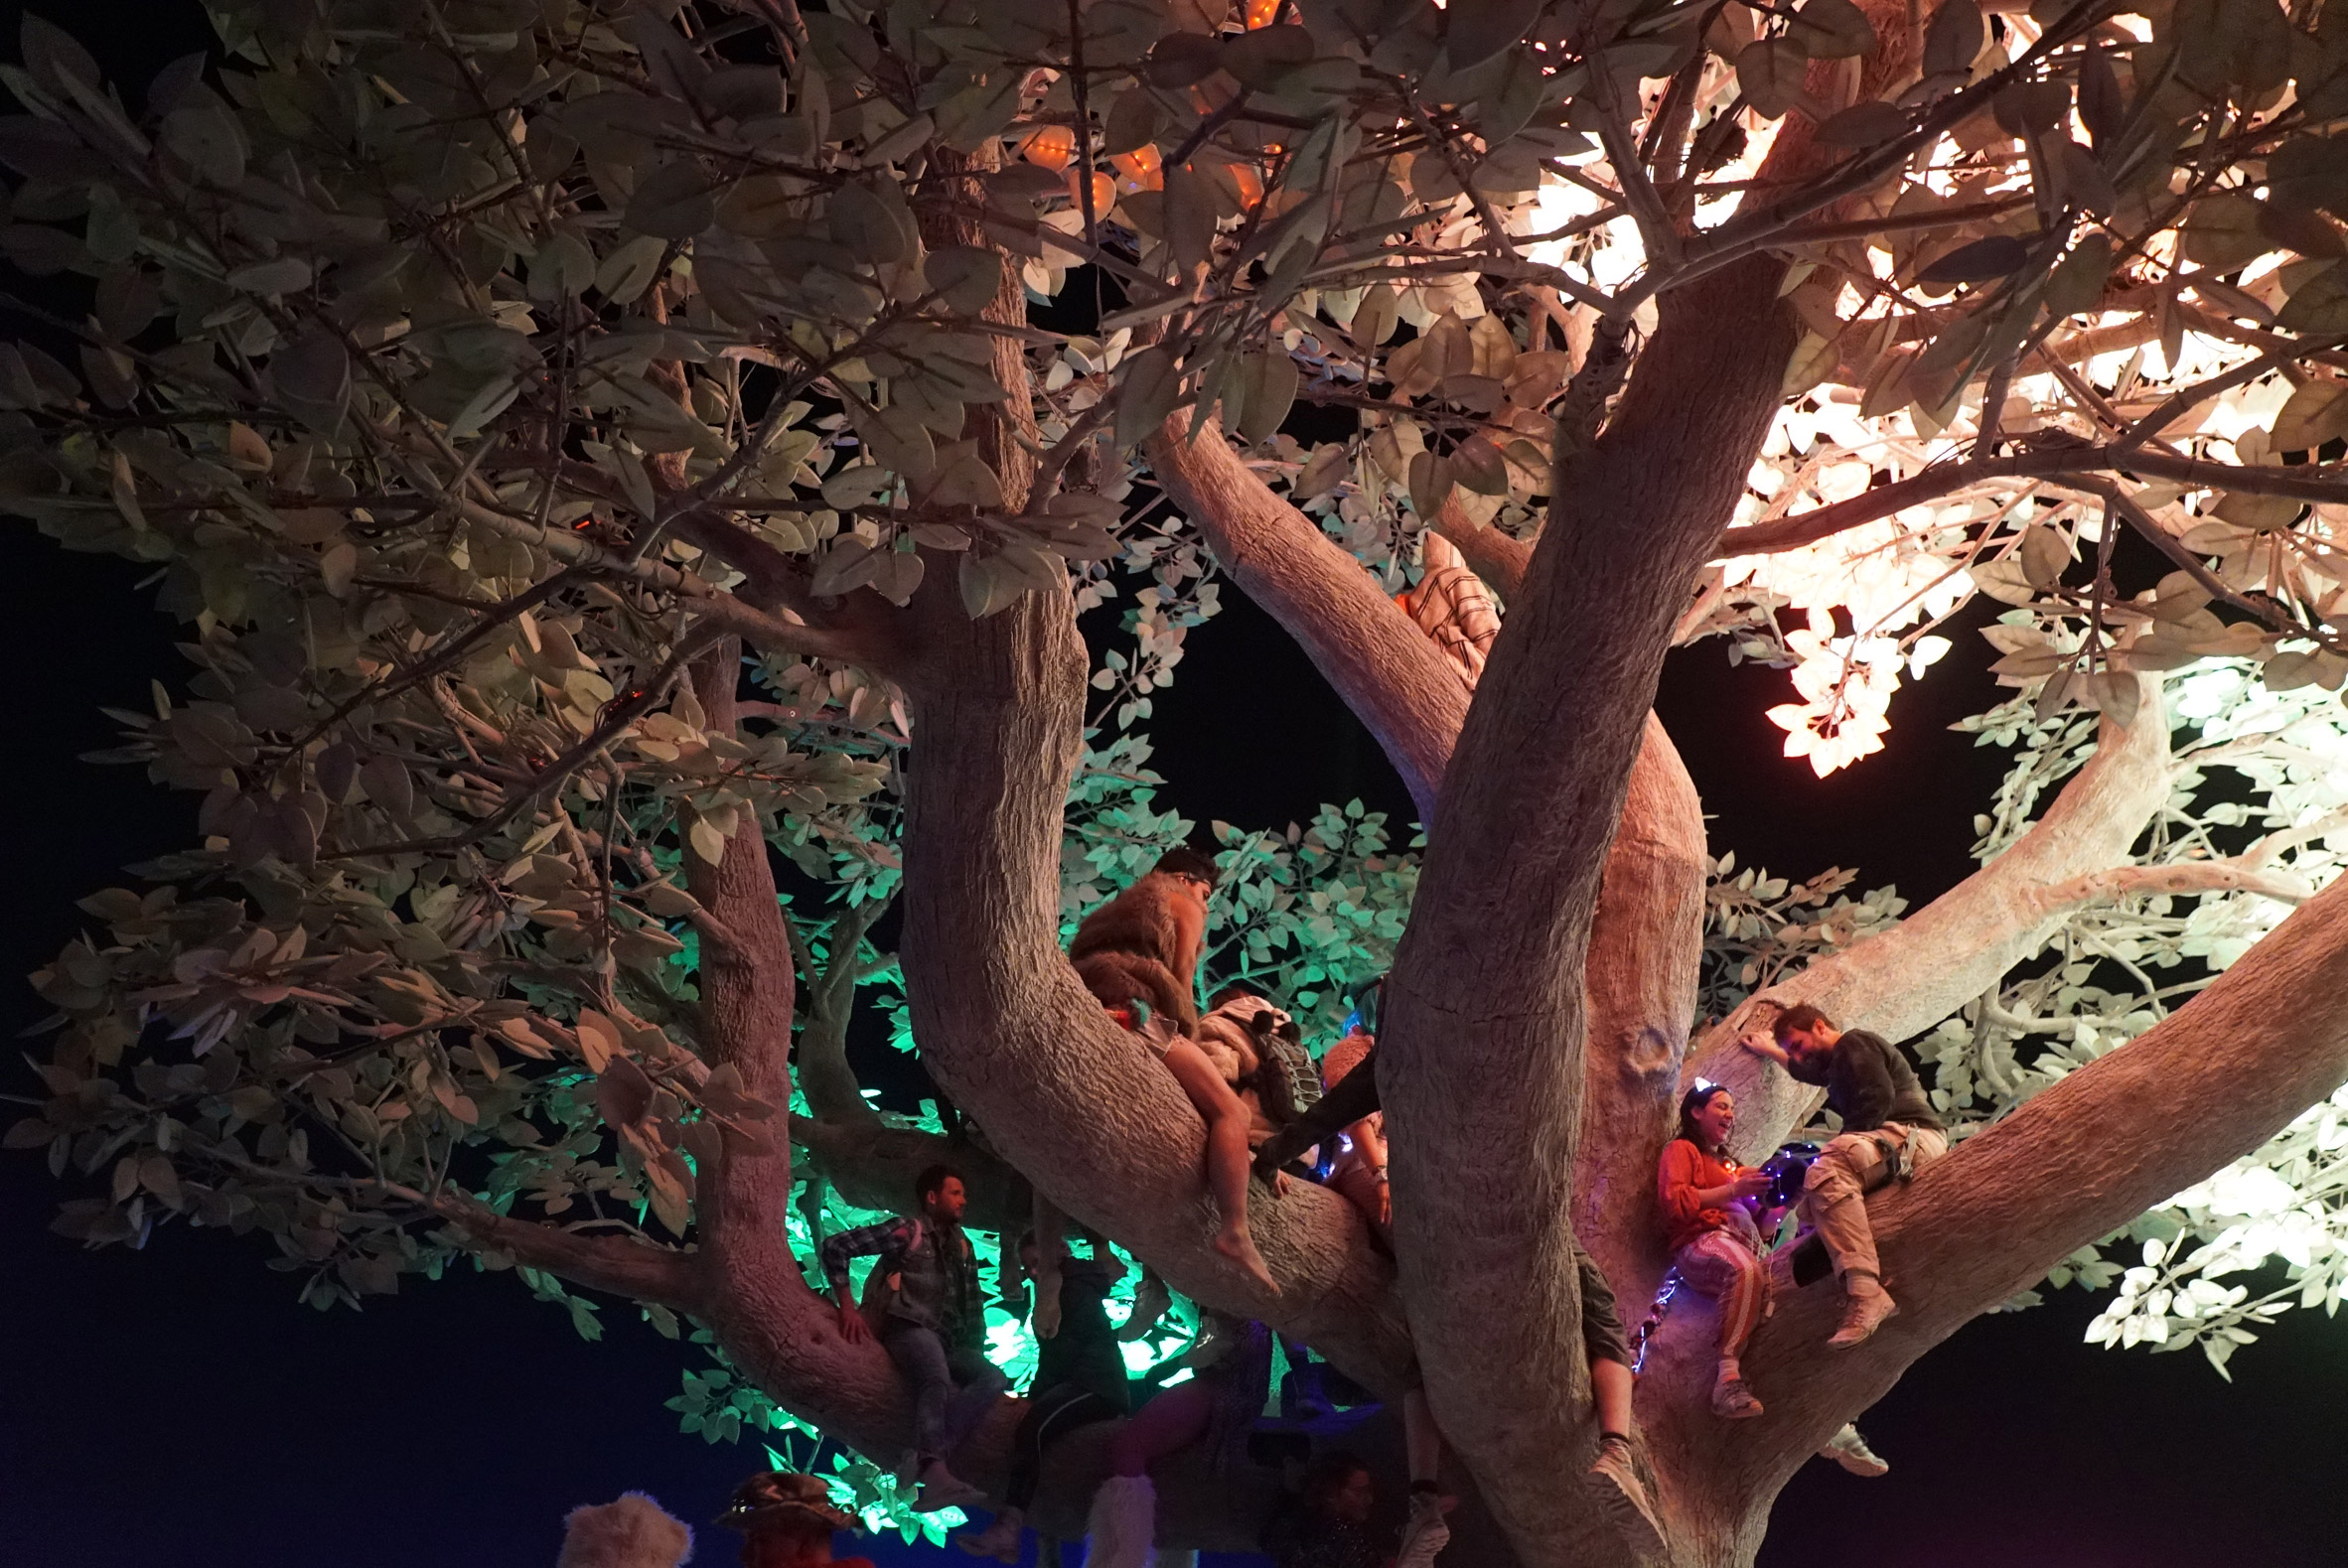 Studio Drift's Tree of Ténéré responds to Burning Man attendees with light patterns